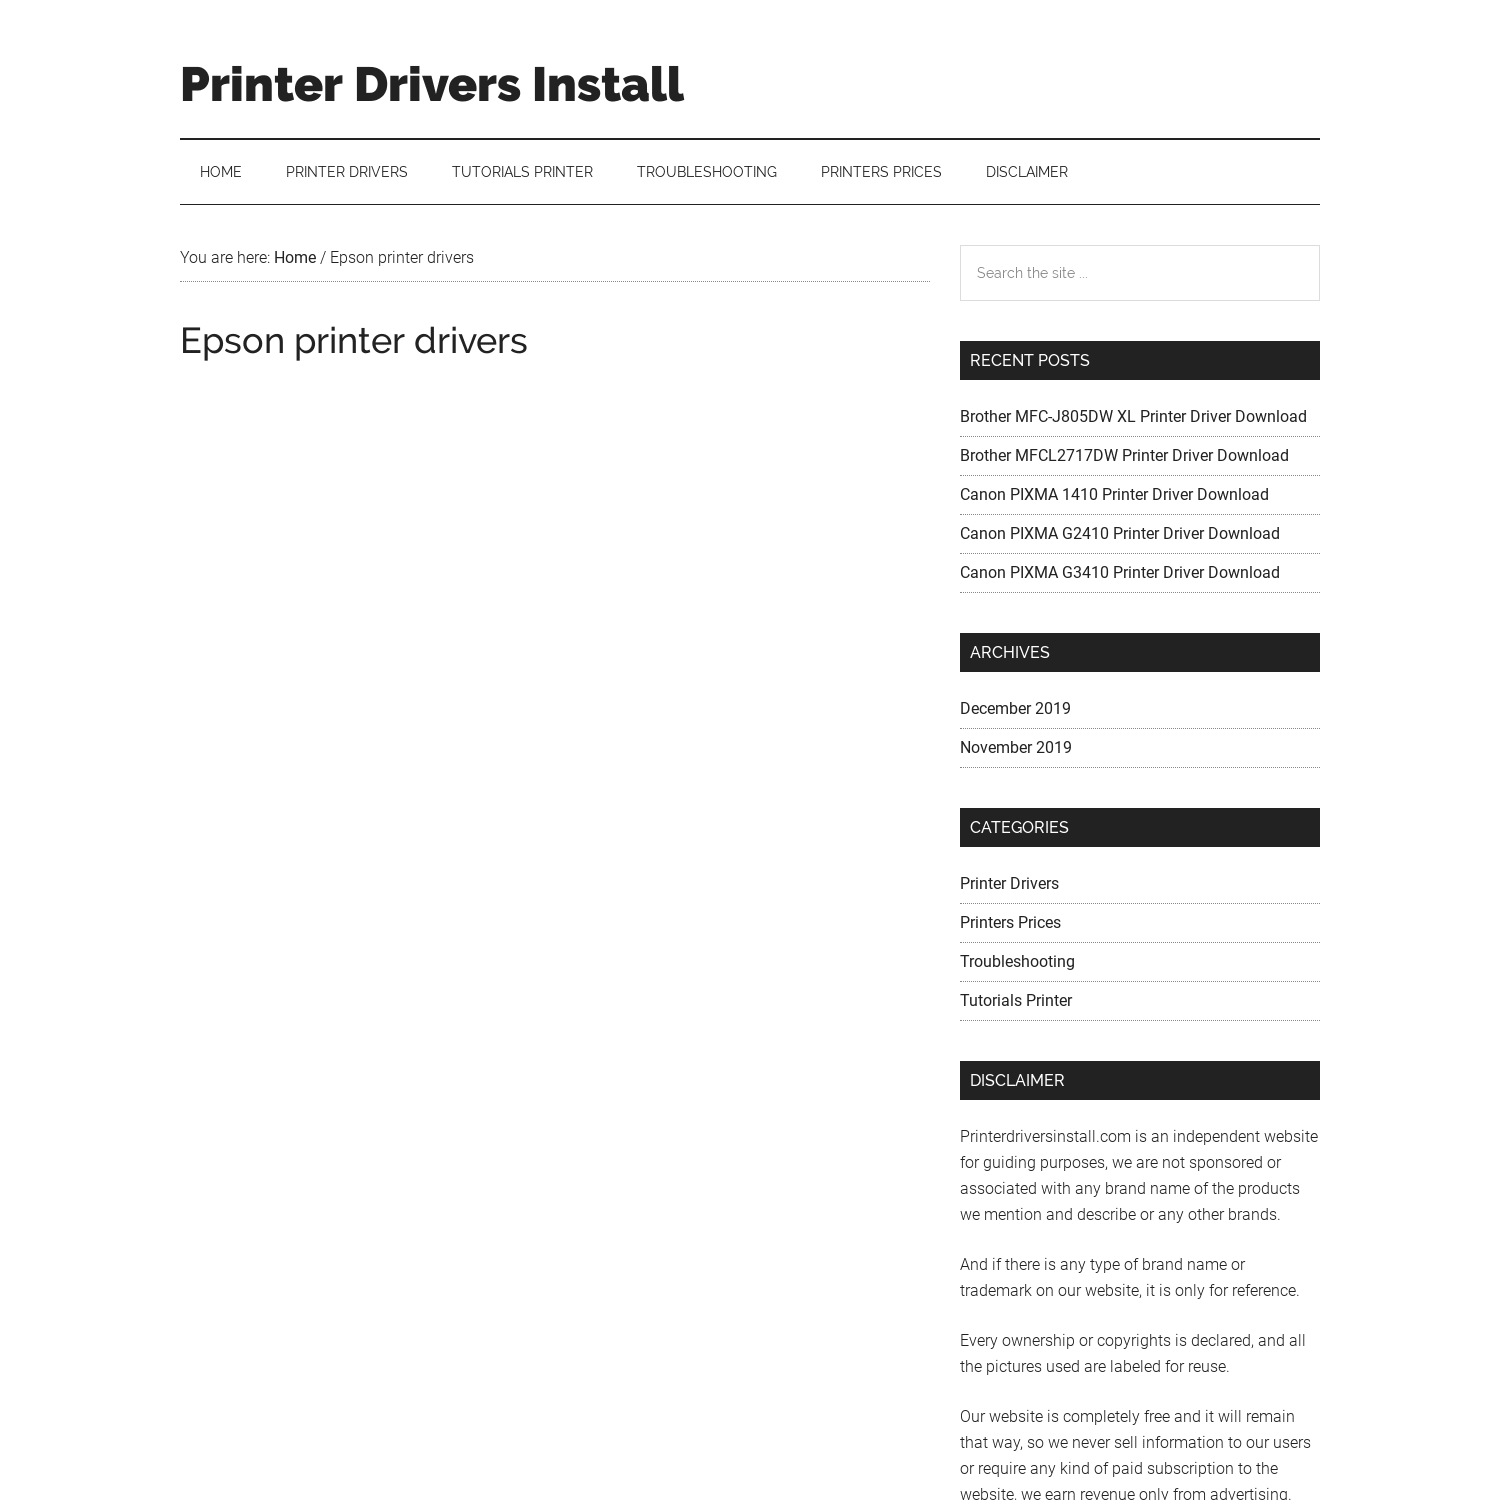 Epson printer drivers - Printer Drivers Install